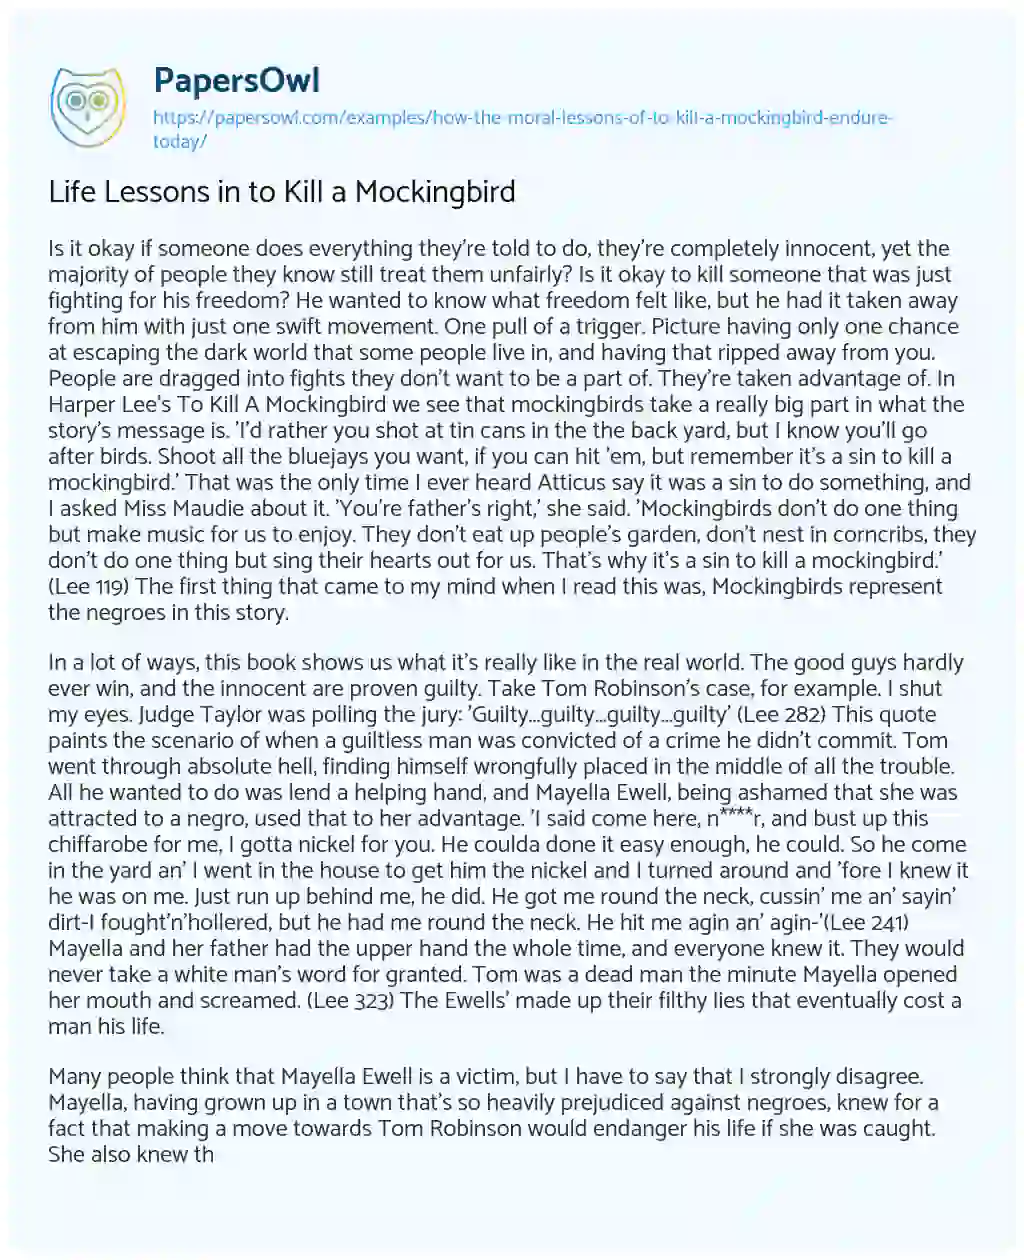 Life Lessons in to Kill a Mockingbird essay